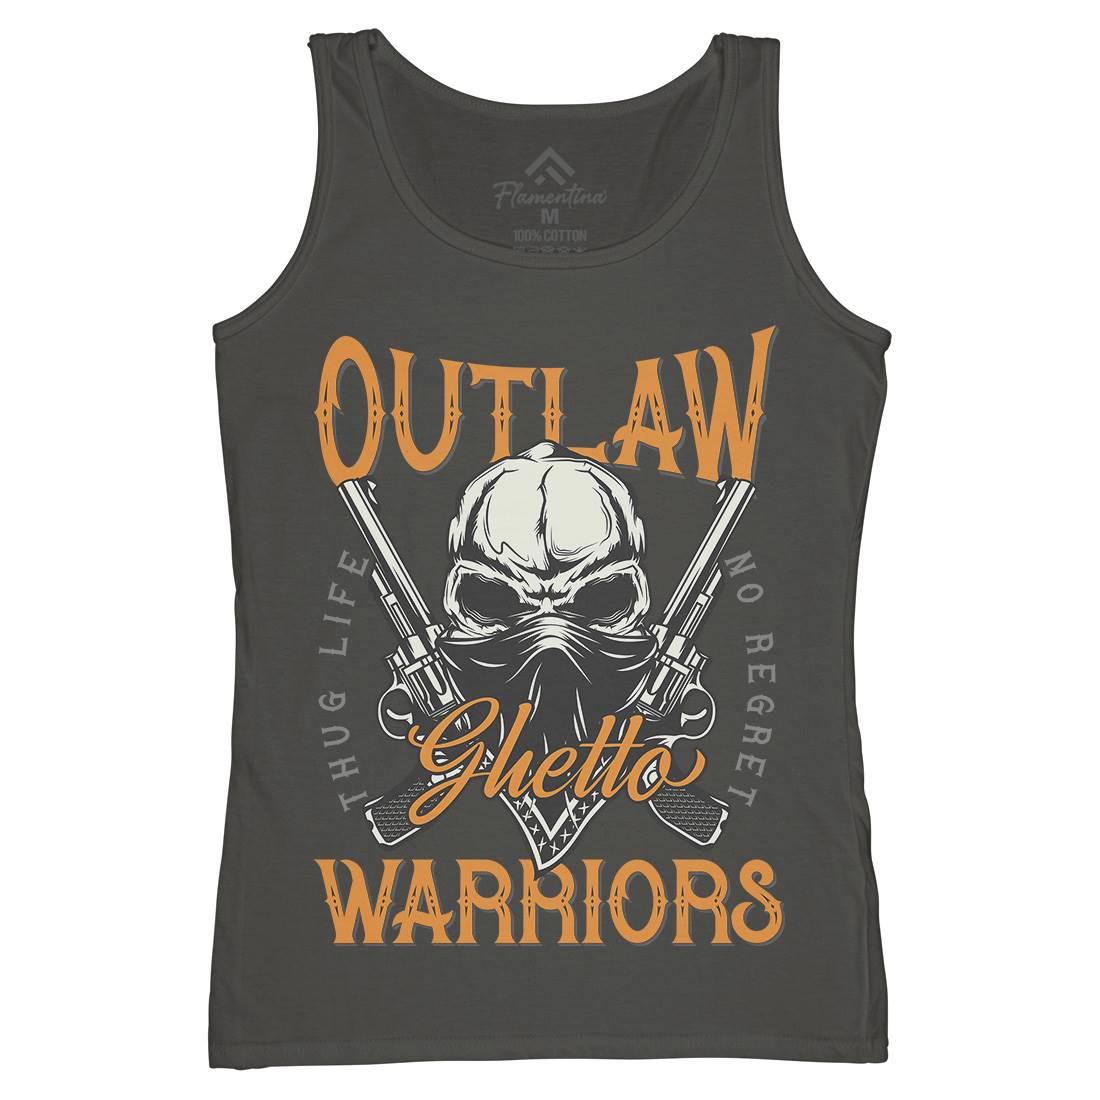 Outlaw Warriors Womens Organic Tank Top Vest Retro D959